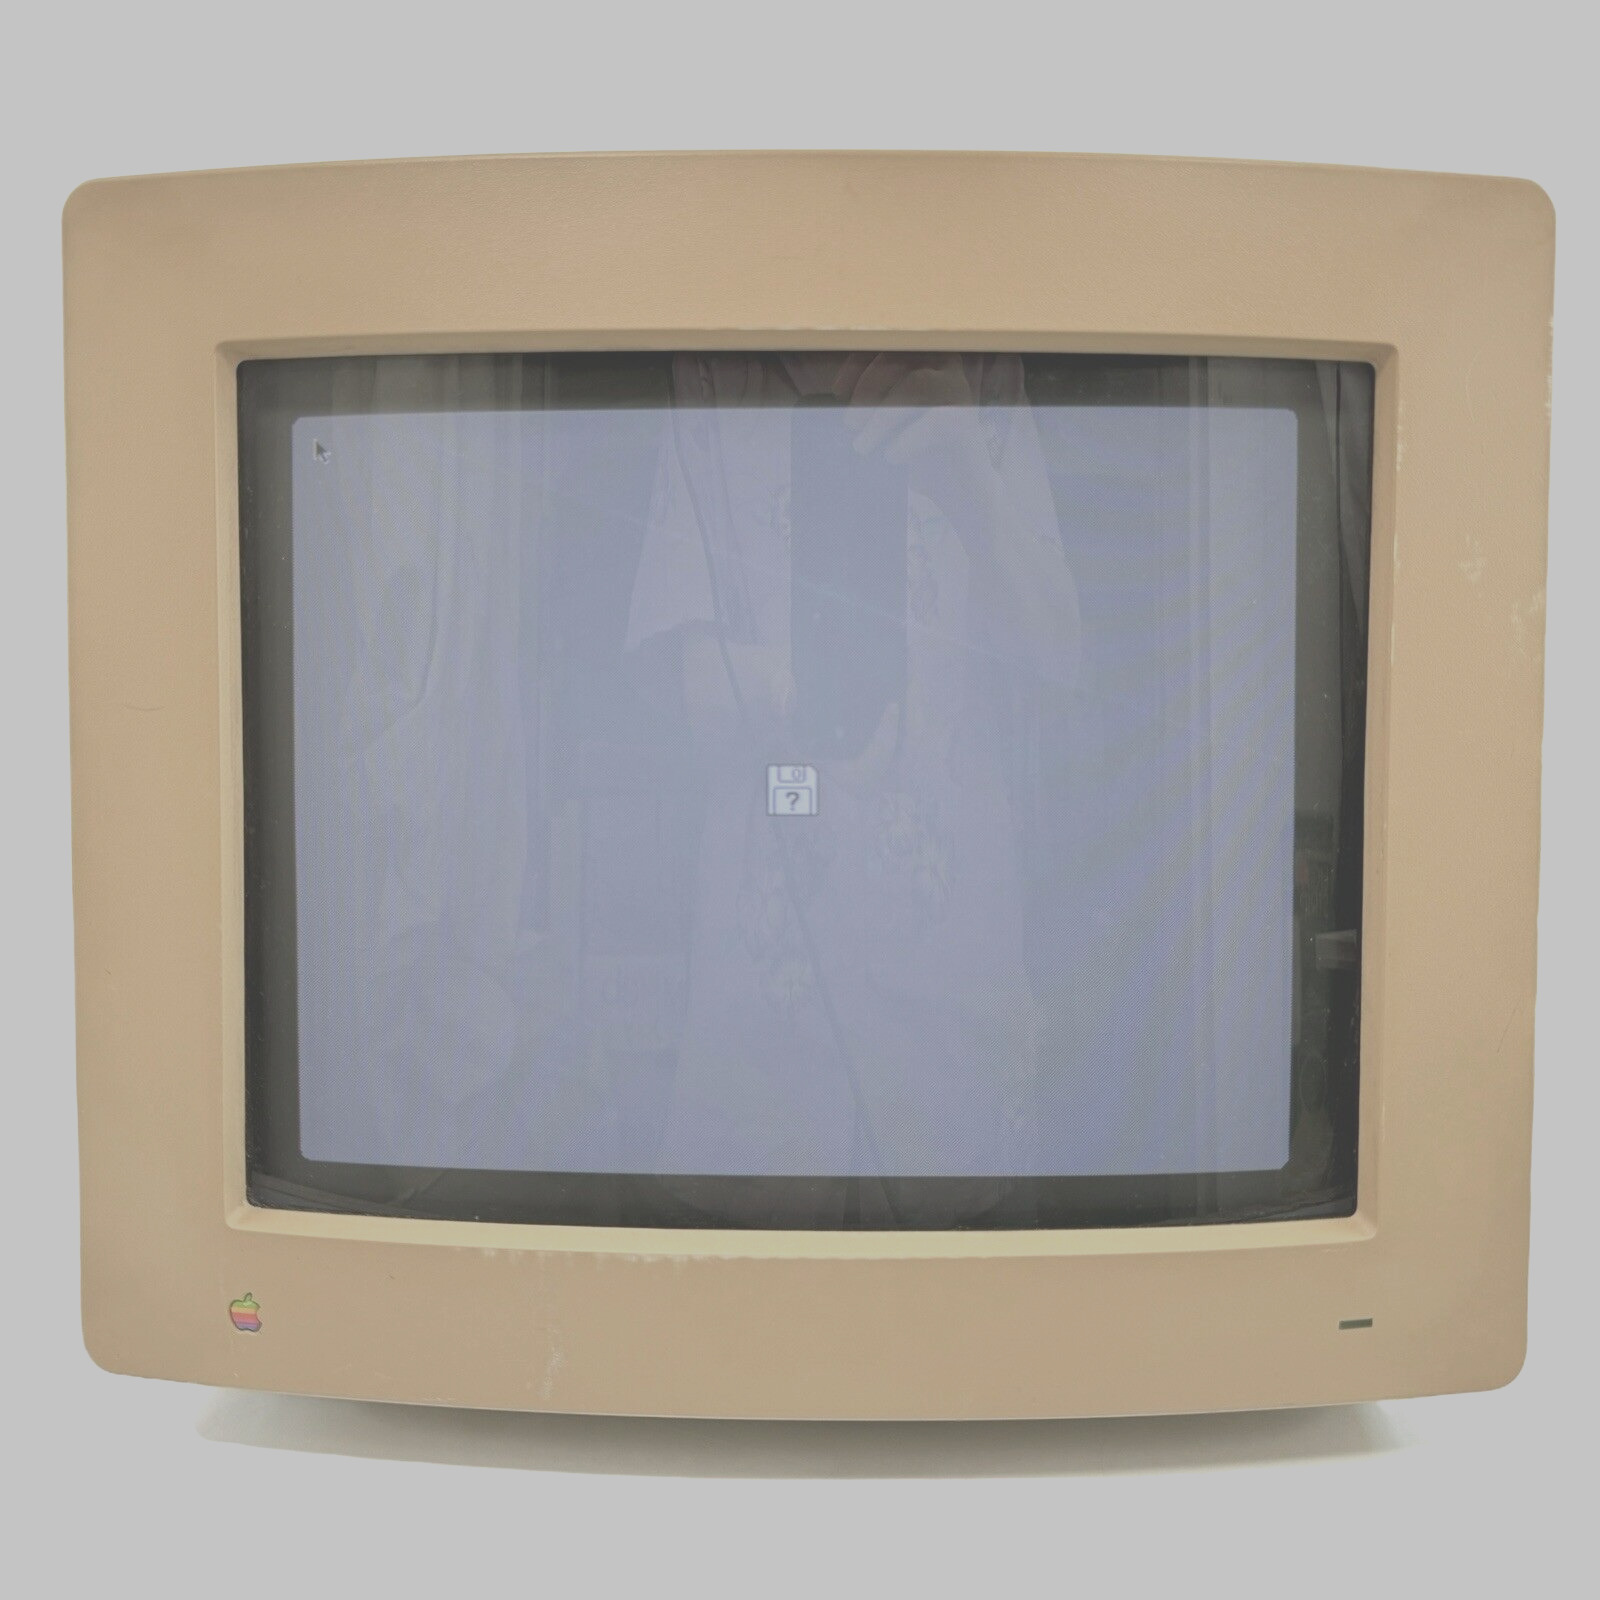 Apple Color RGB High Resolution Monitor M1297 VTG 1991 WORKS